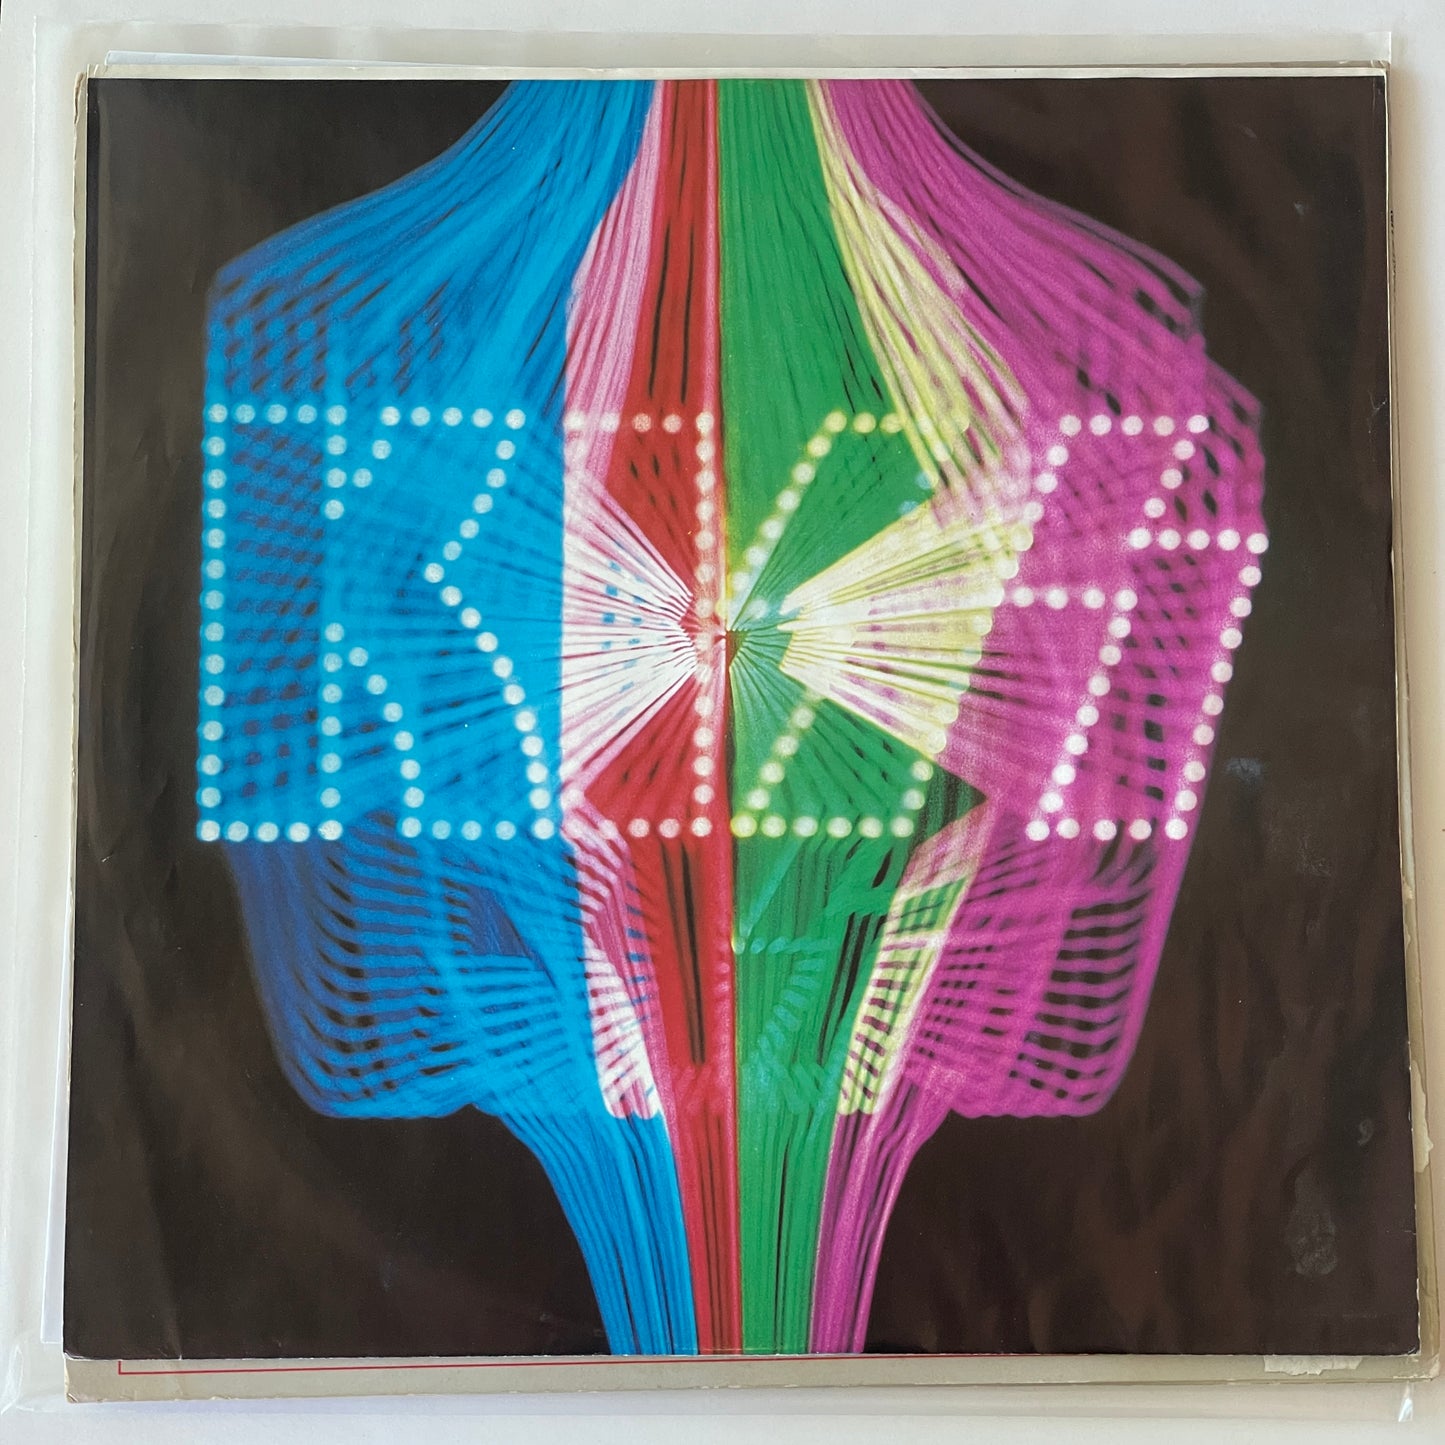 KISS - Dynasty original LP (used)